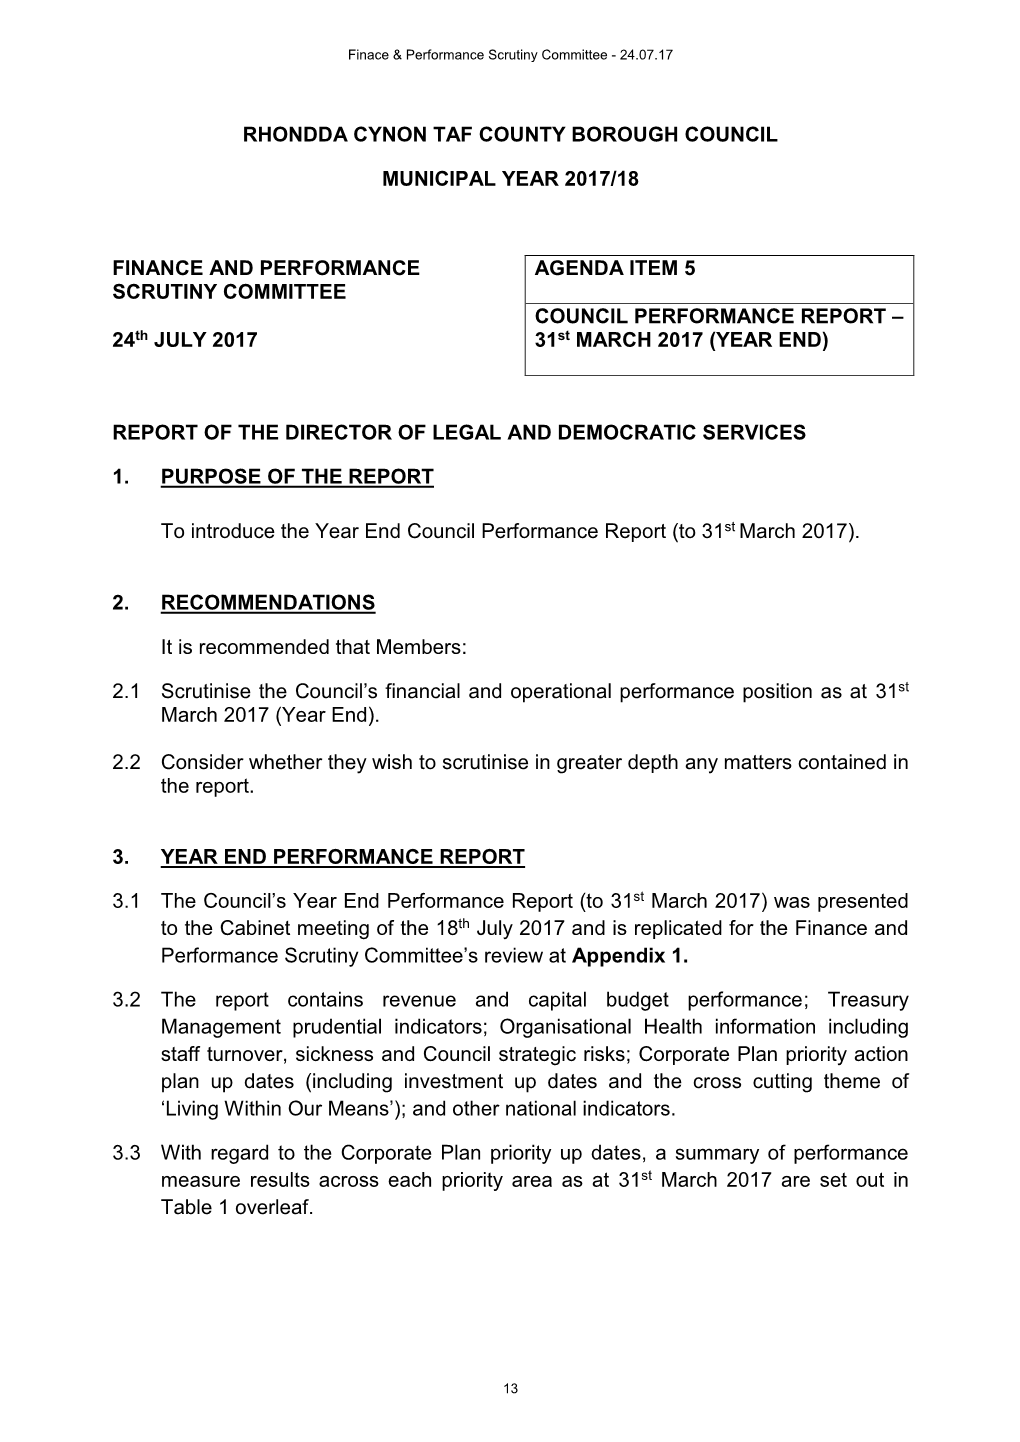 Agenda Item 5 Council Performance Report